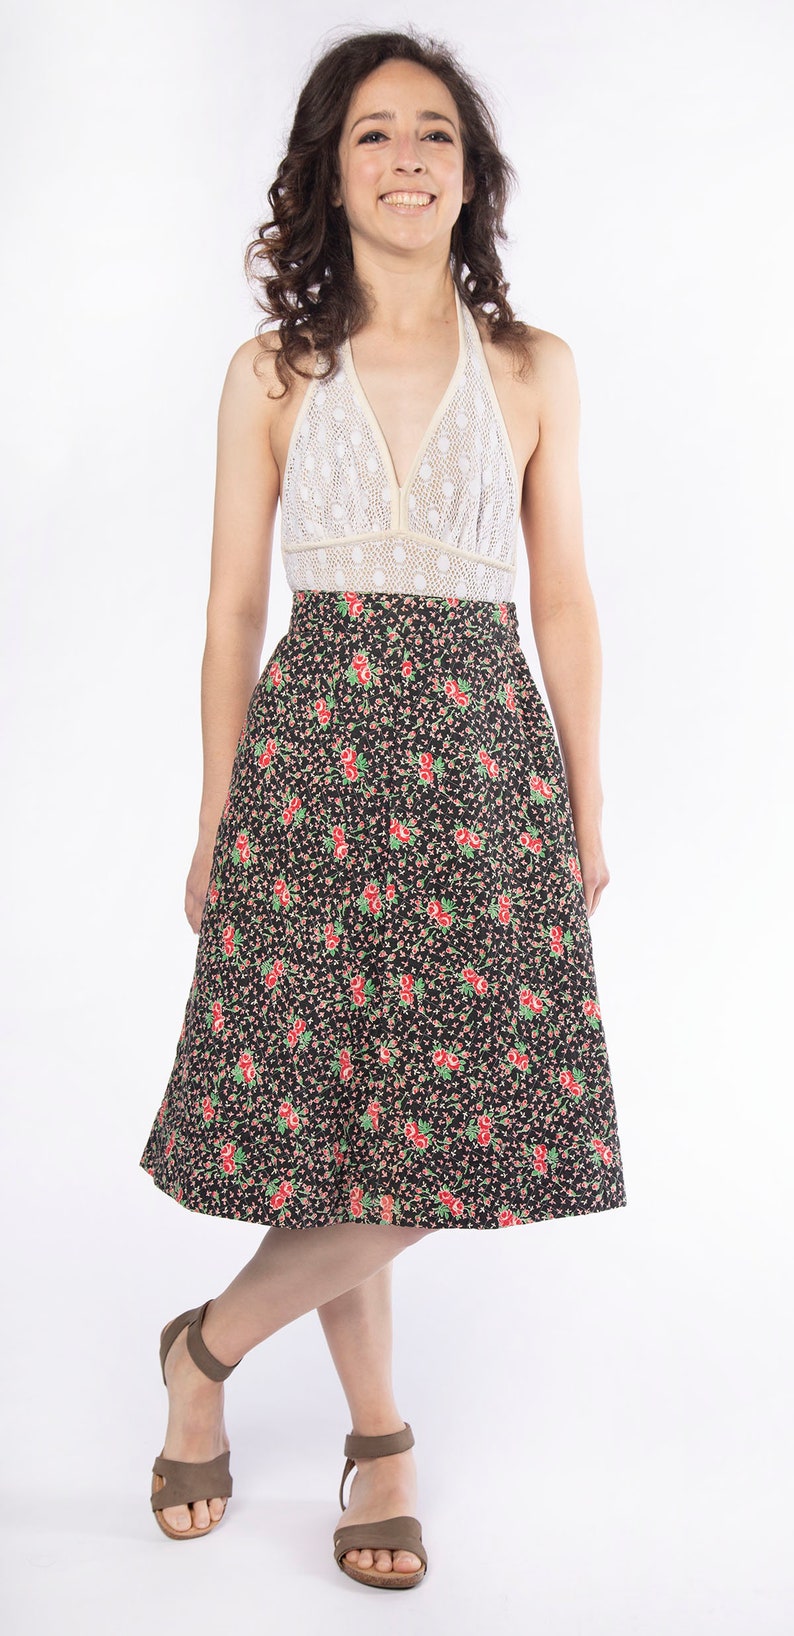 Vintage Rose Print Quilt Skirt A-Line Knee Length Black & Pink Floral Print Skirt 1970s Cotton Small 26 Waist image 7